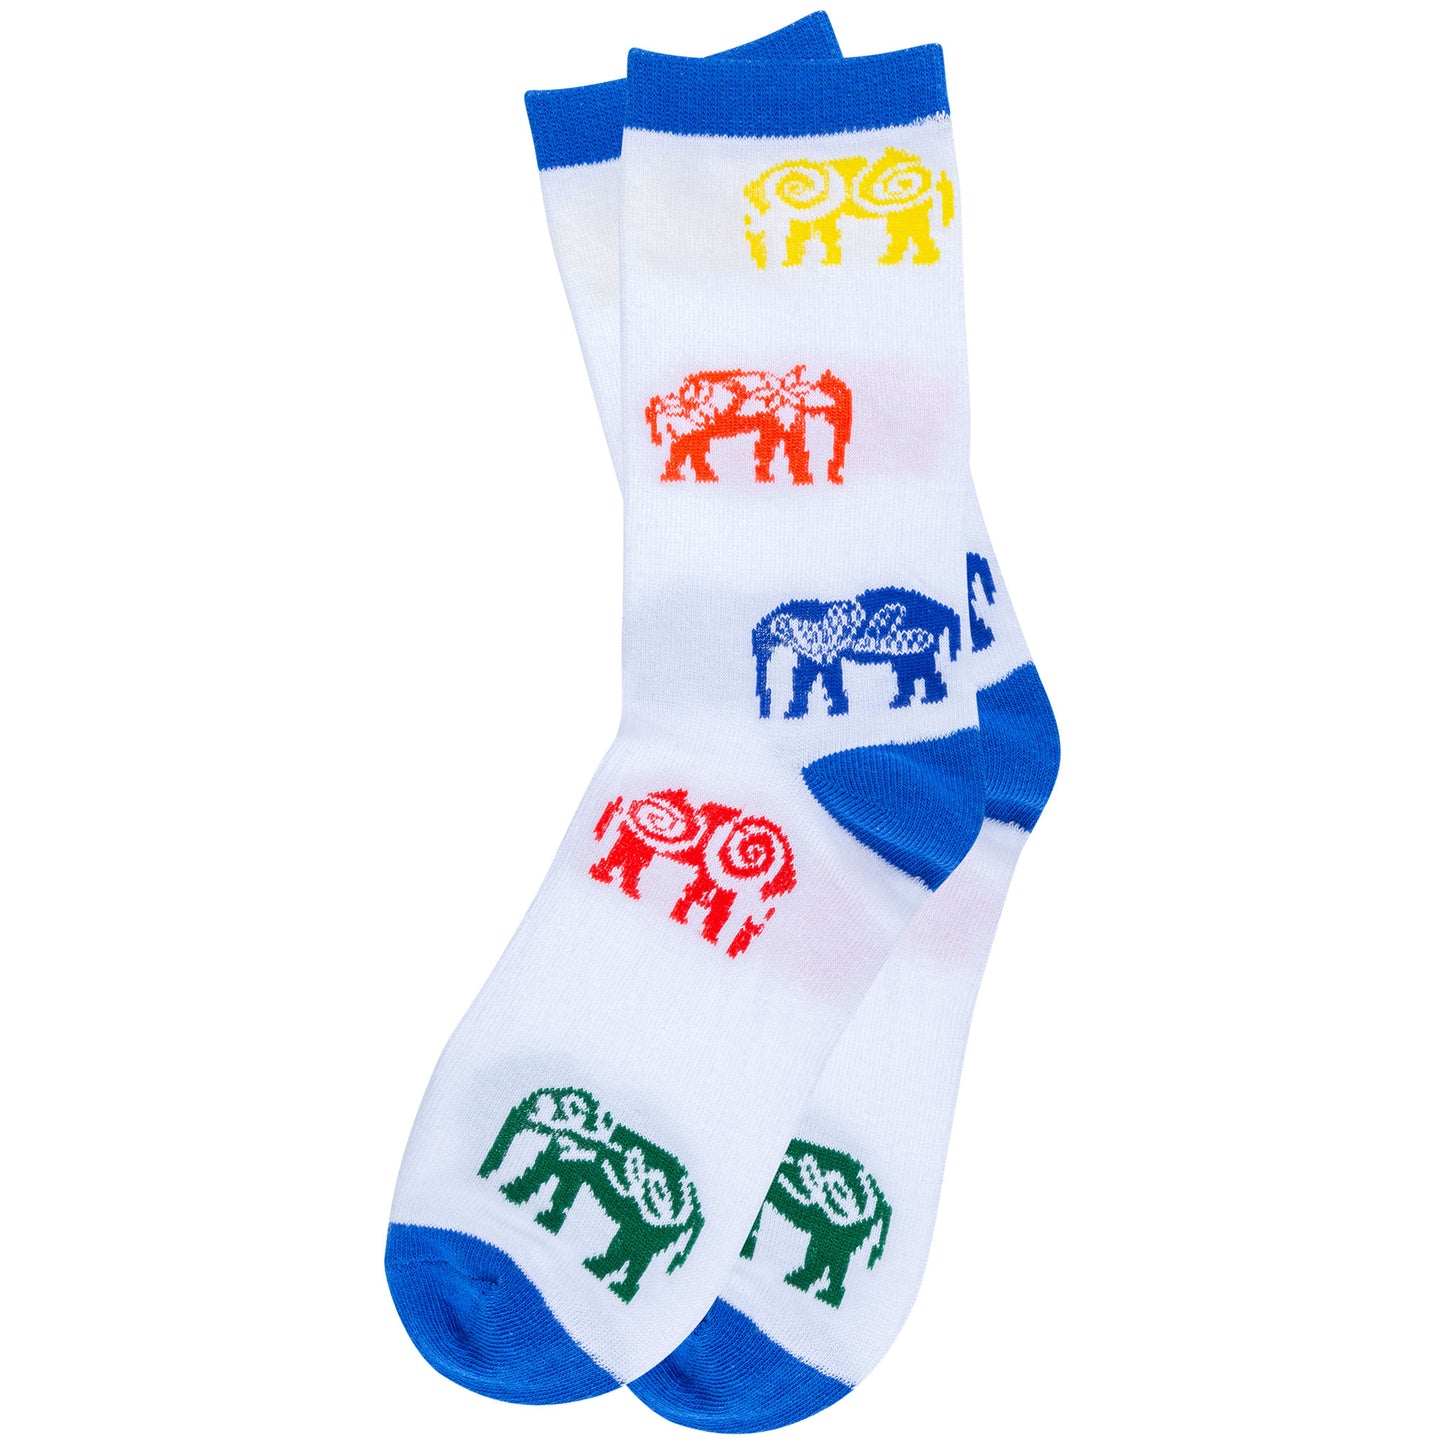 Elephant Love Socks - Set of 2